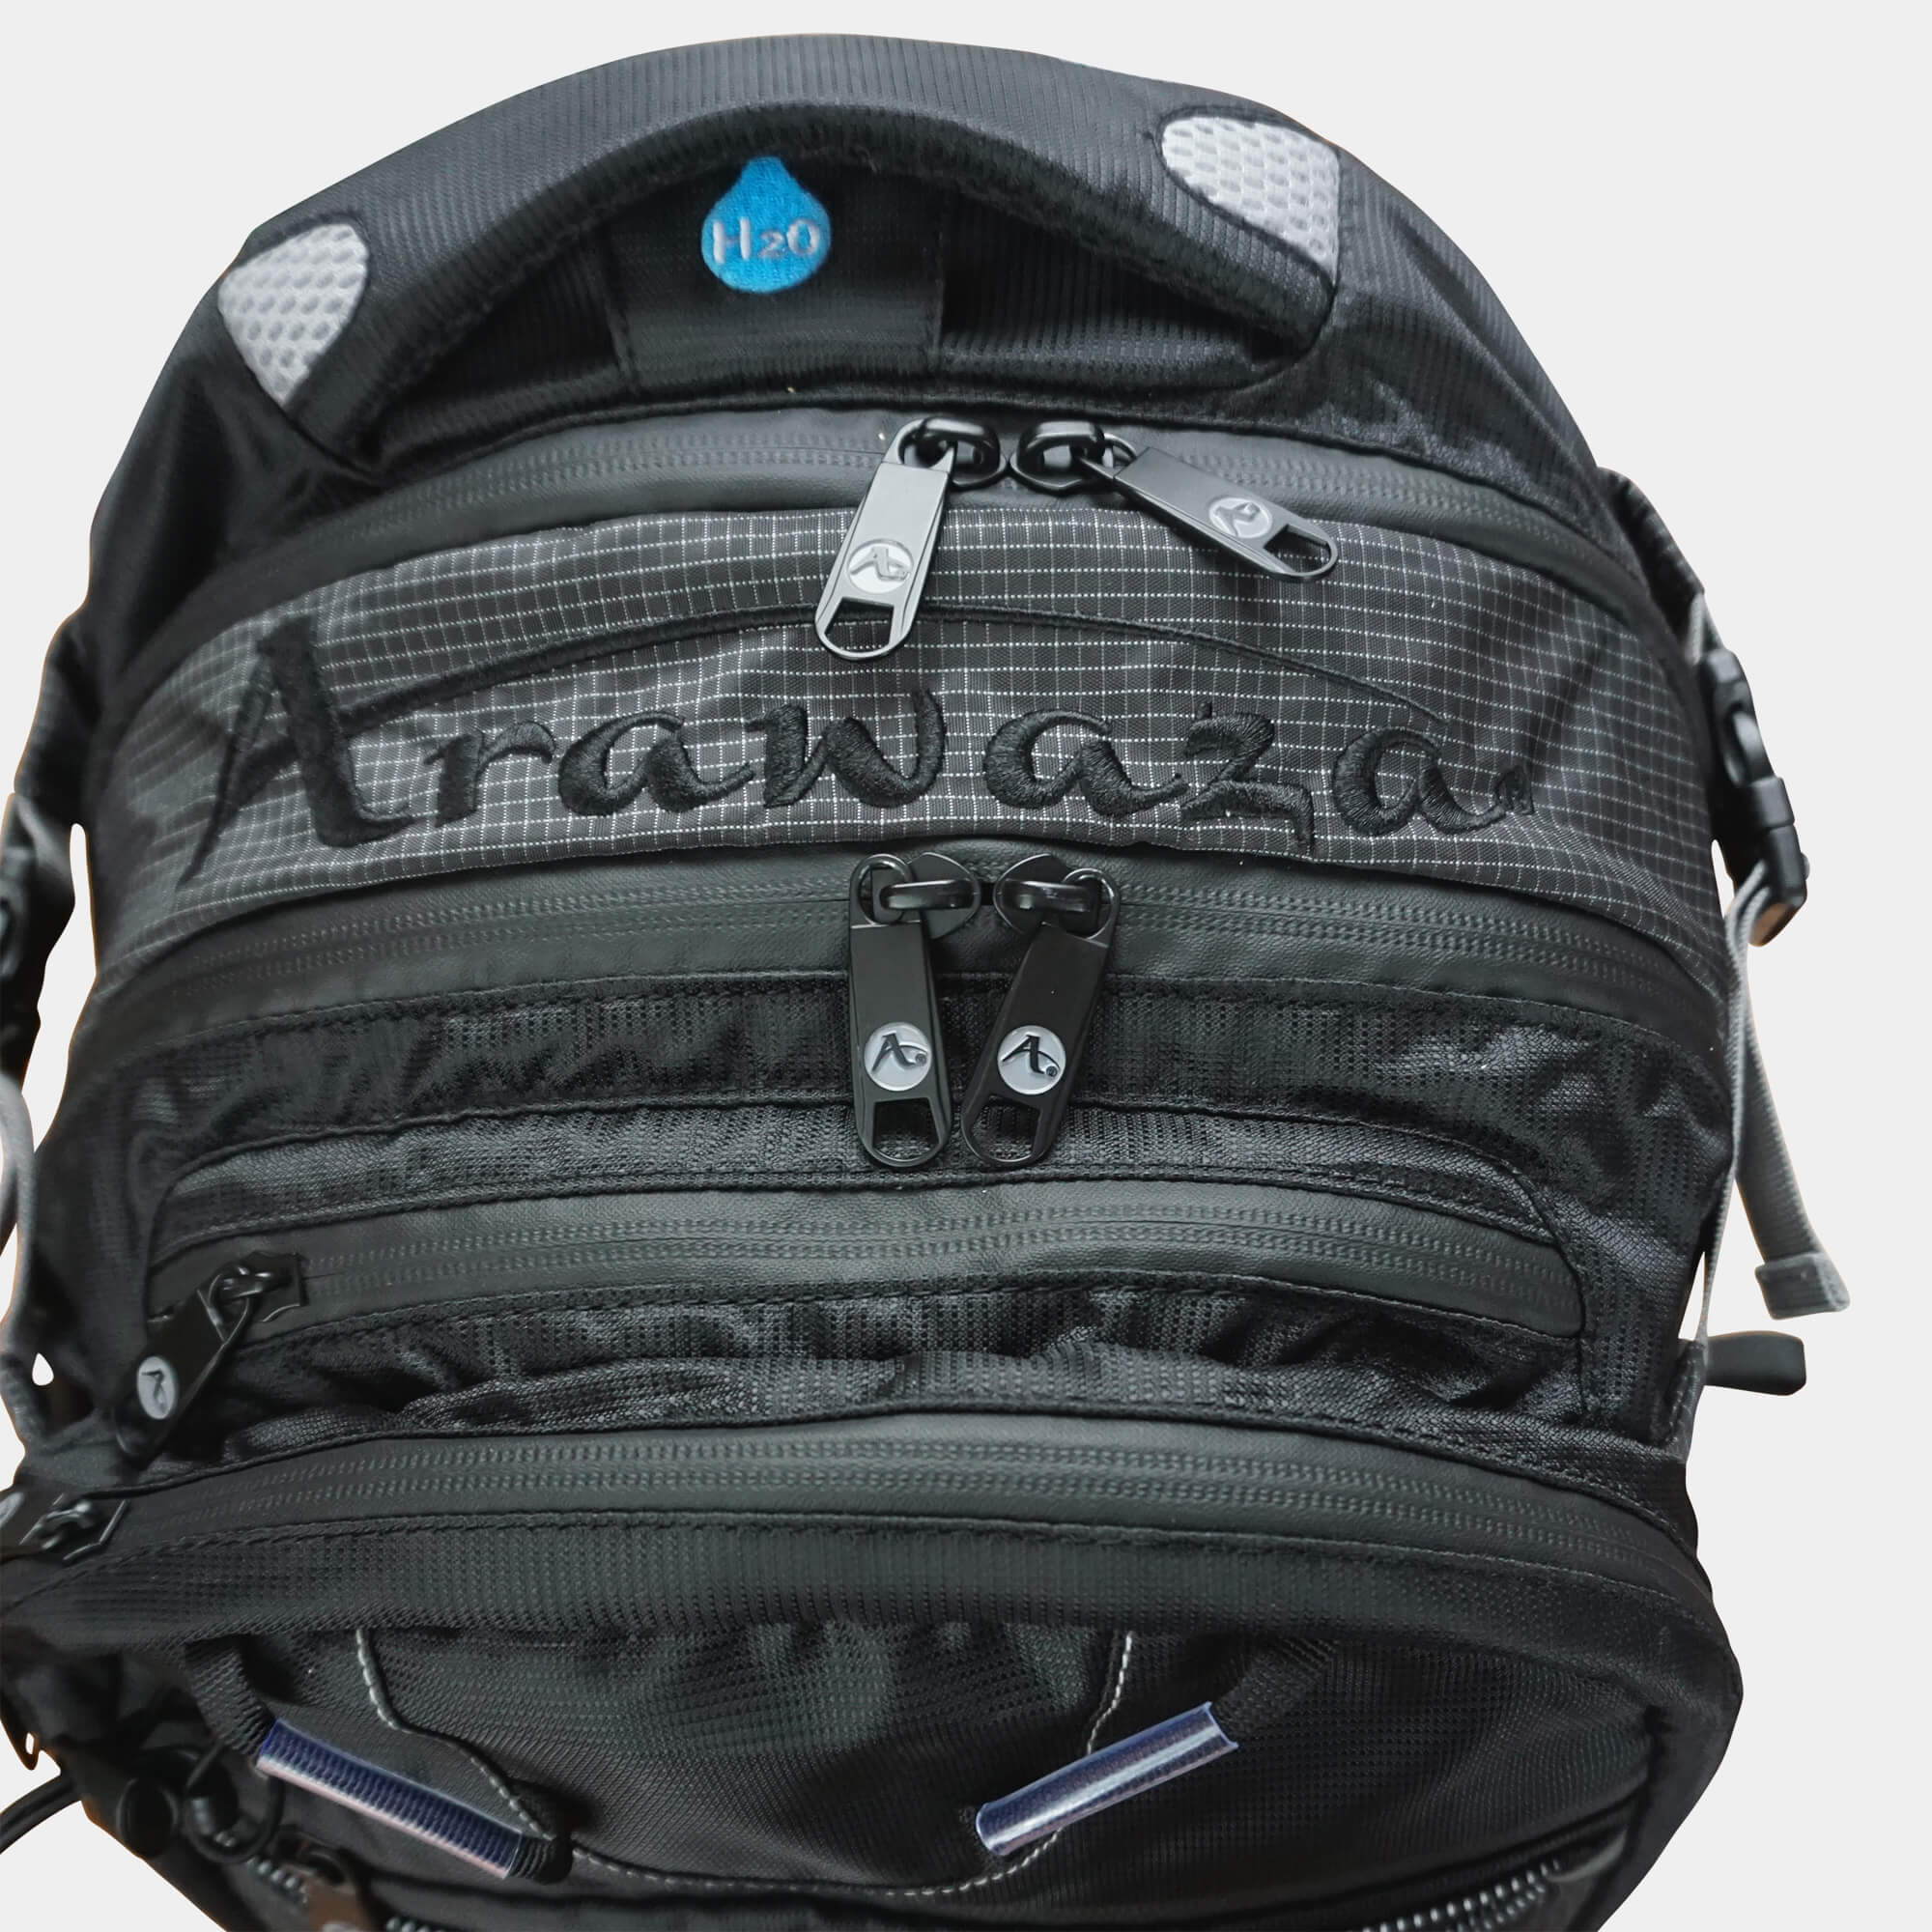 Arawaza Technical Sport Bag With Wheels